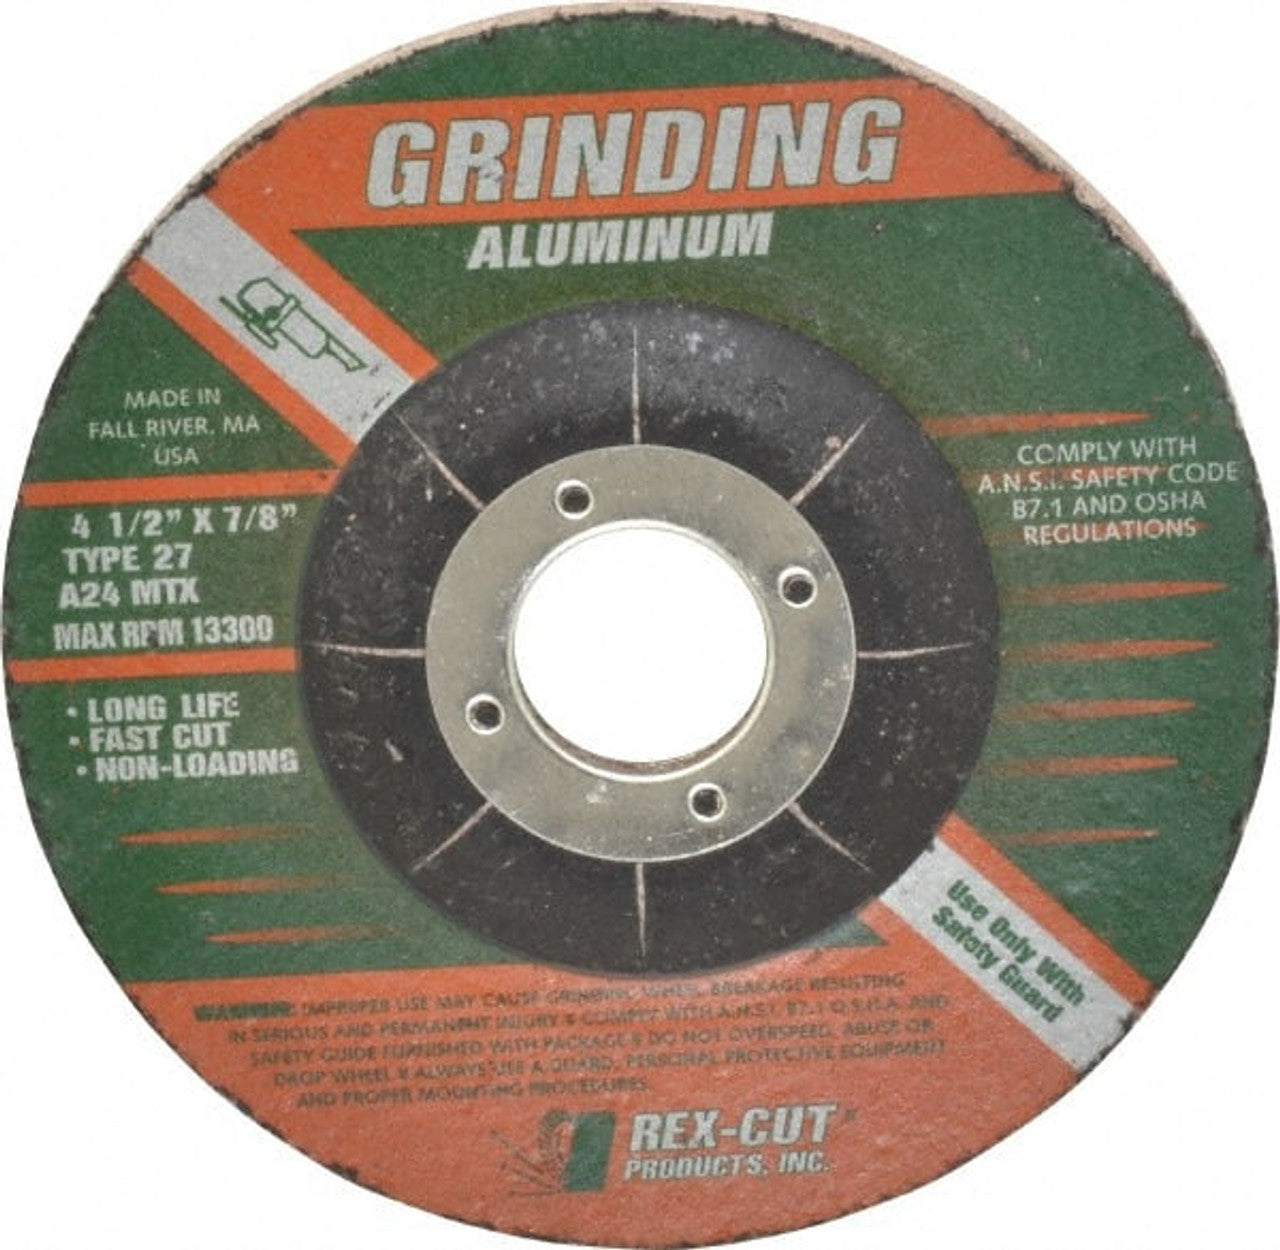 REX CUT PRODUCT, 24 Grit, 4-1/2" Wheel Diam, 1/4" Thickness, 7/8, Type 27 Depressed Center Wheel aluminum Oxide